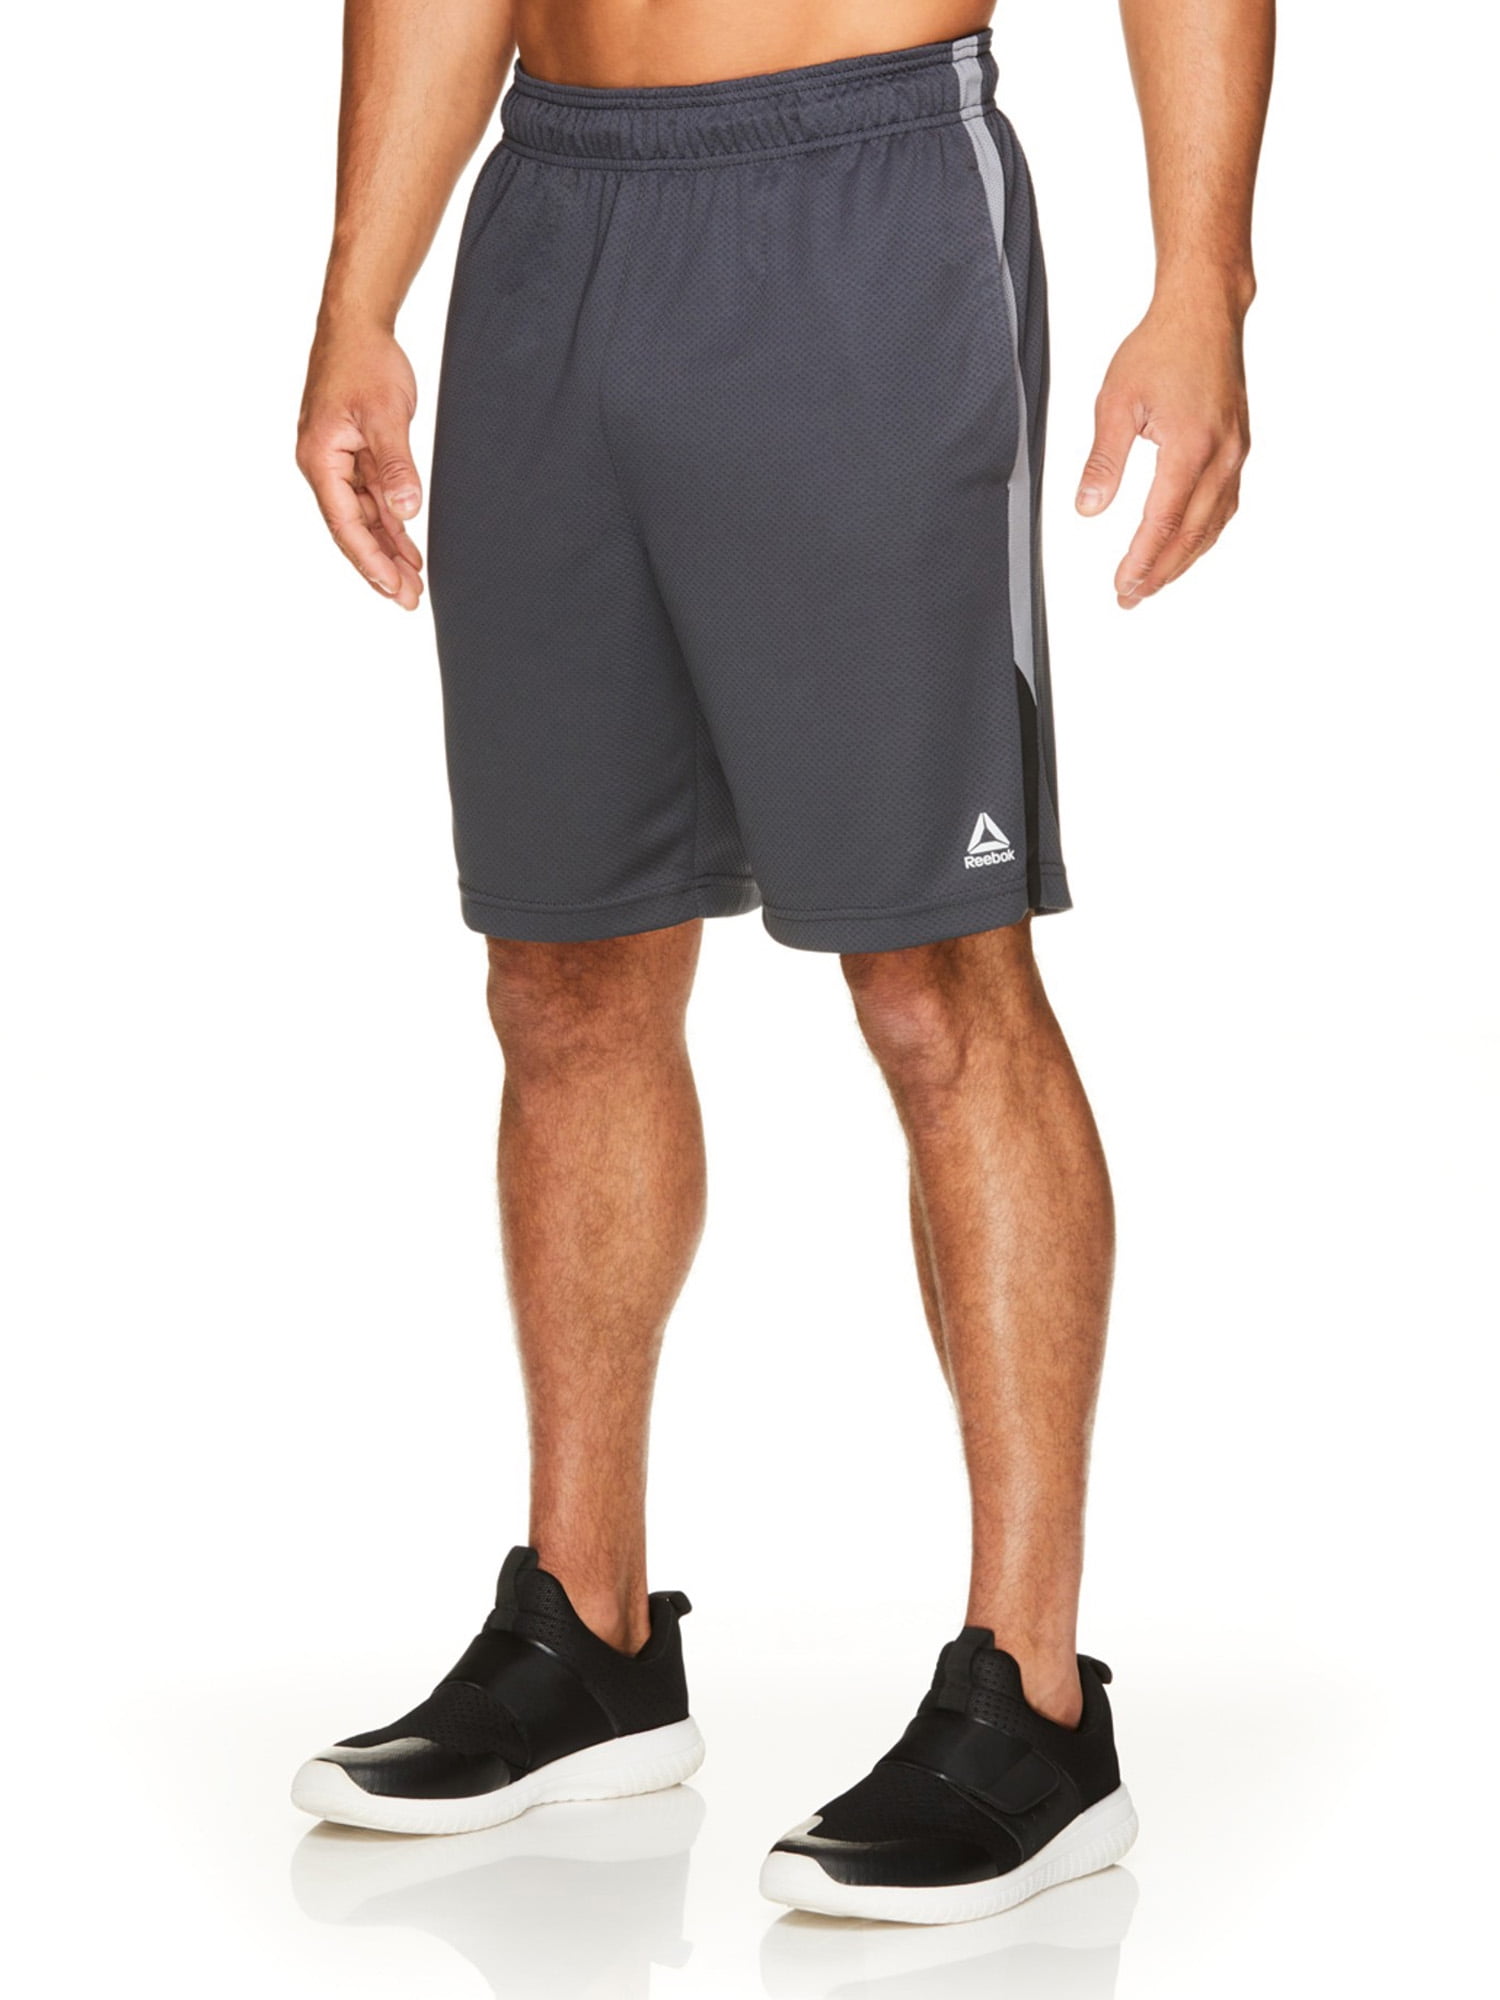 Reebok Men's Ready Set Shorts - Walmart.com